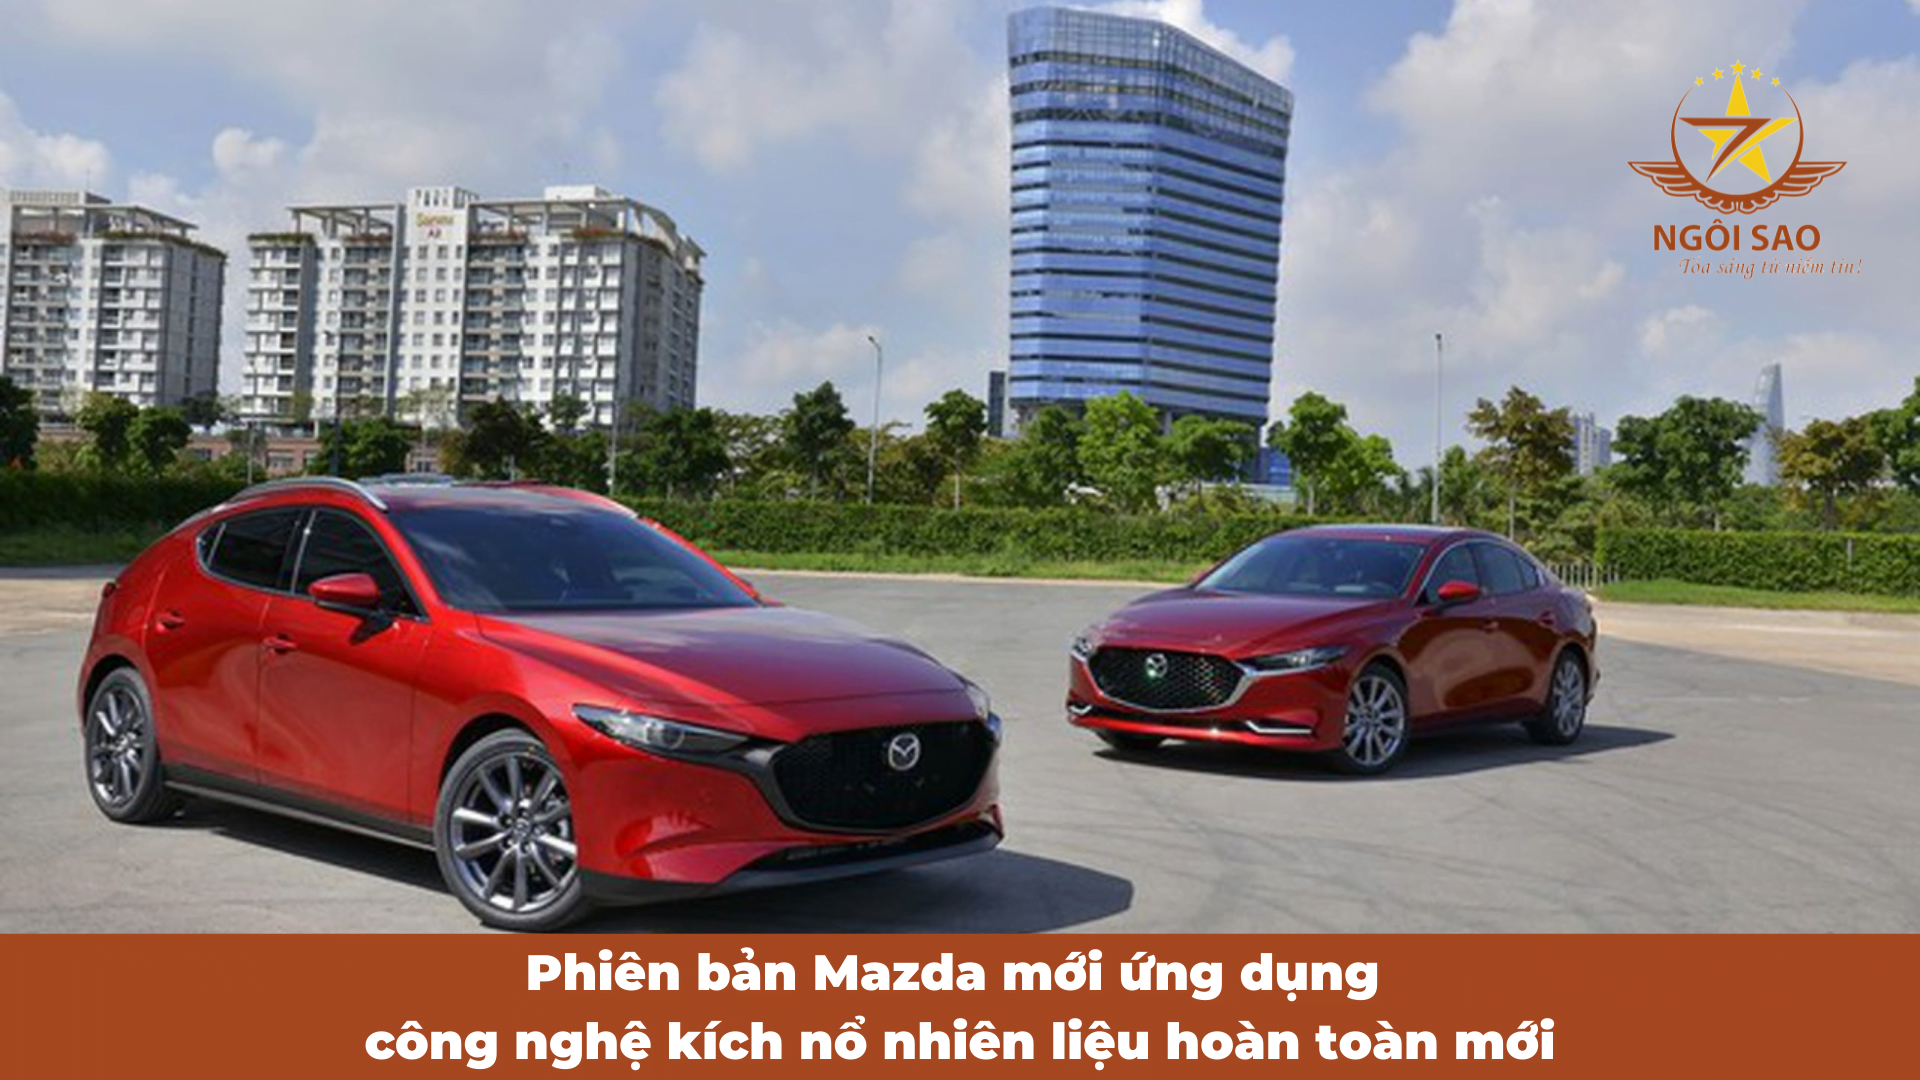 Mức tiêu hao nhiên liệu xe Mazda 3 là bao nhiêu